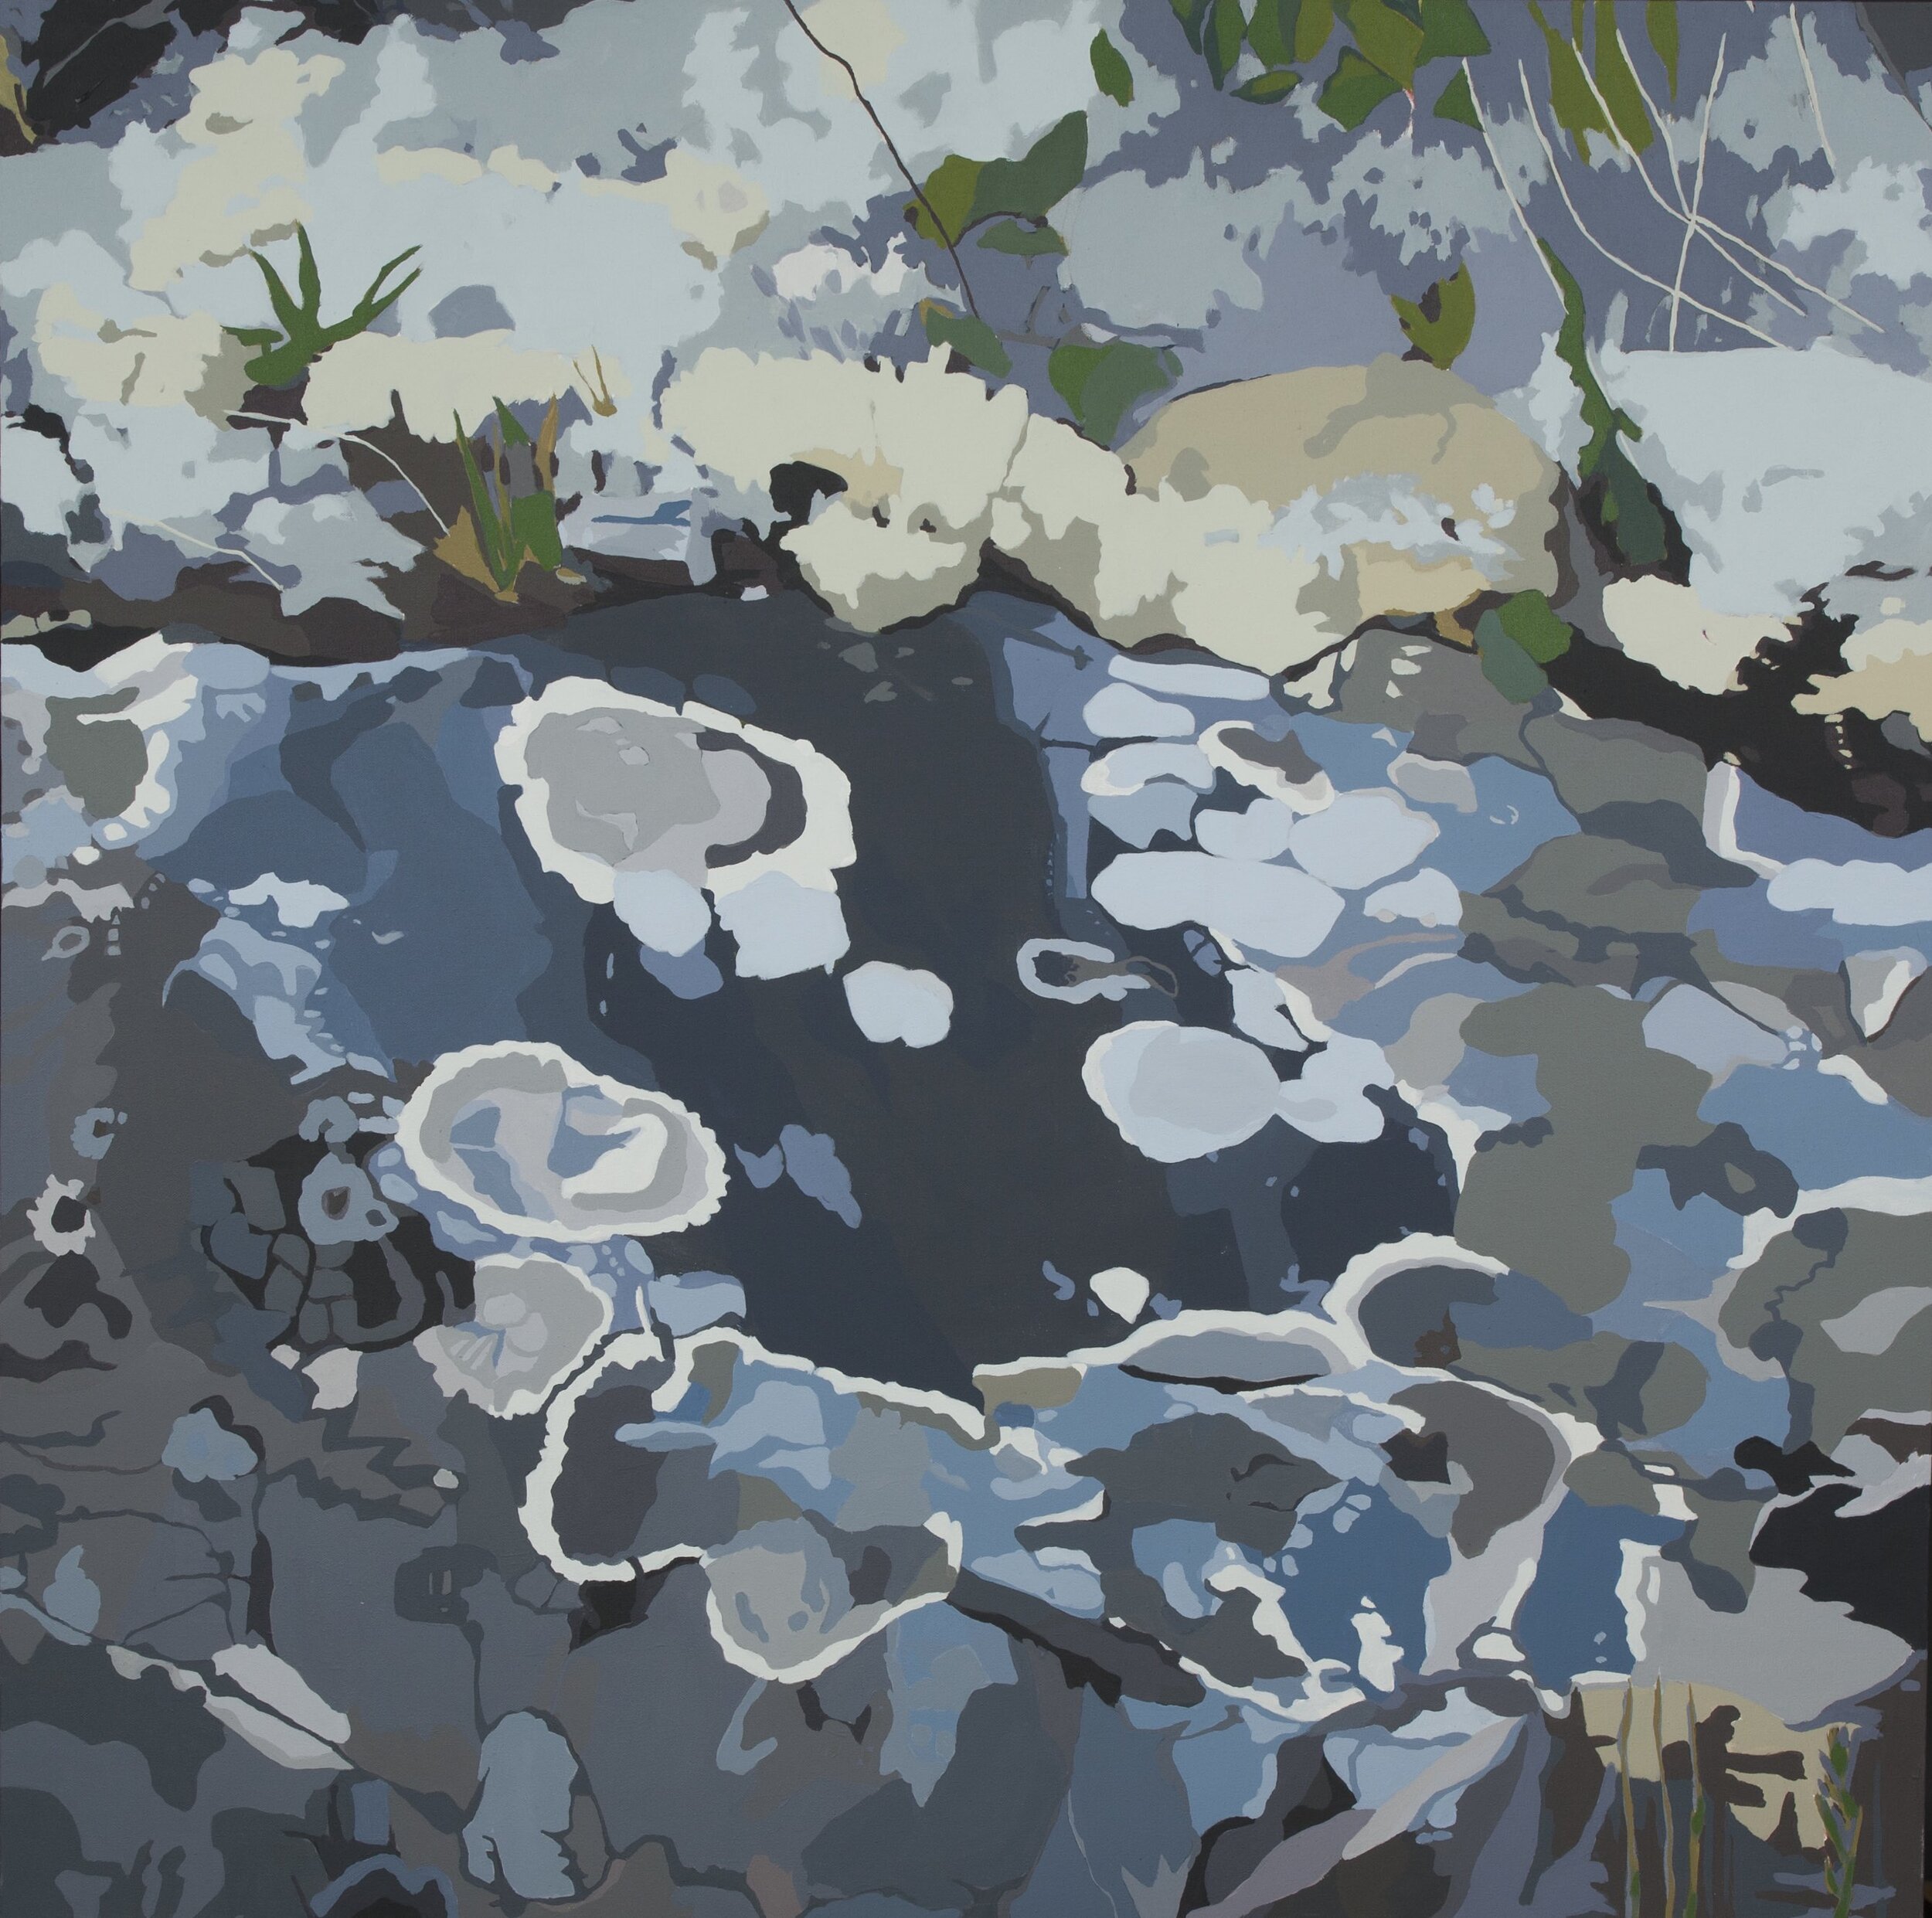 Outcrop #3, White Lichen